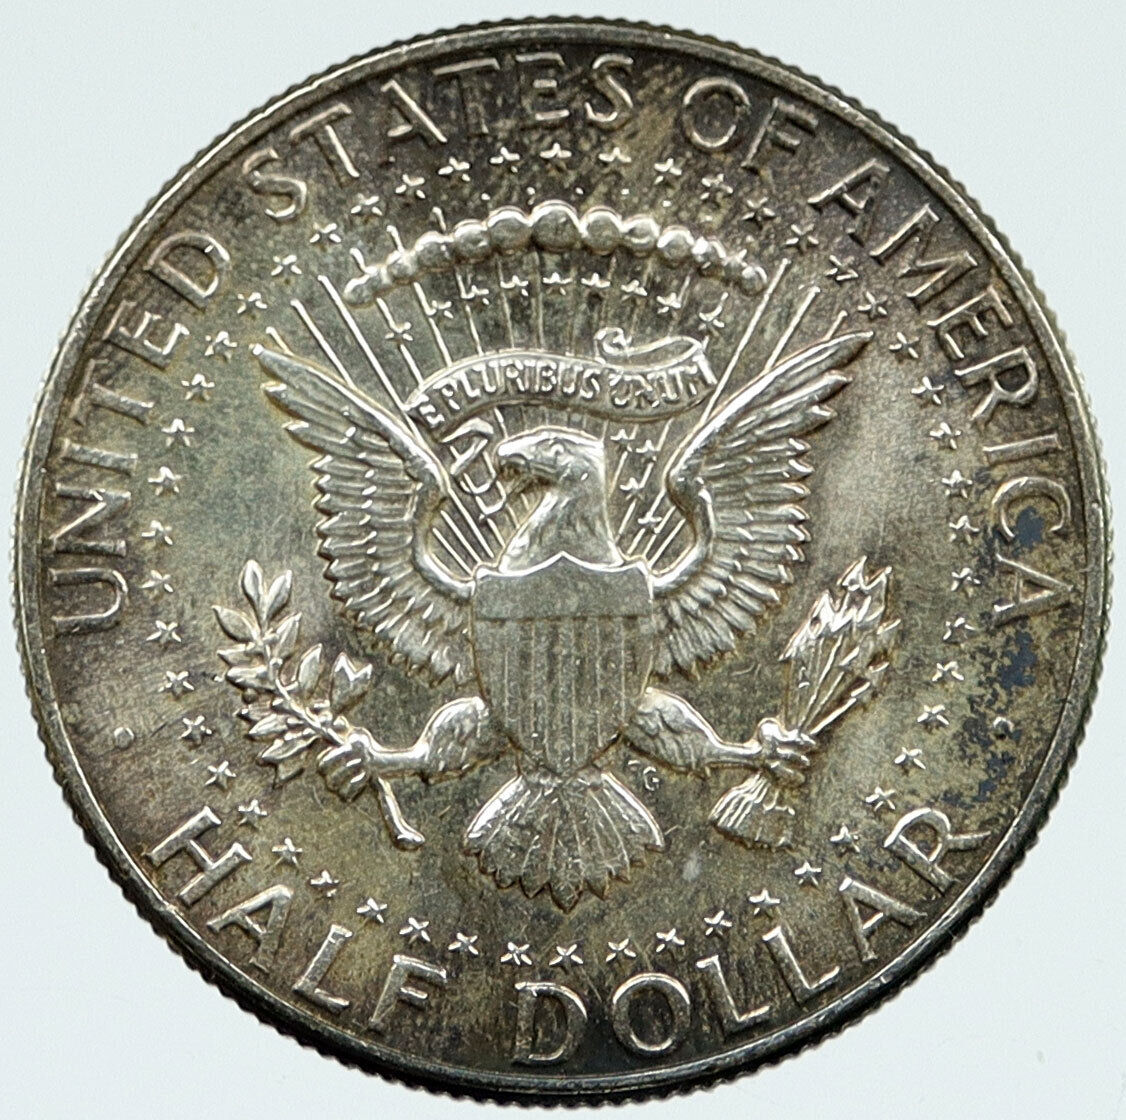 1964 P USA President JOHN F KENNEDY Vintage Silver Half Dollar US Coin i117118